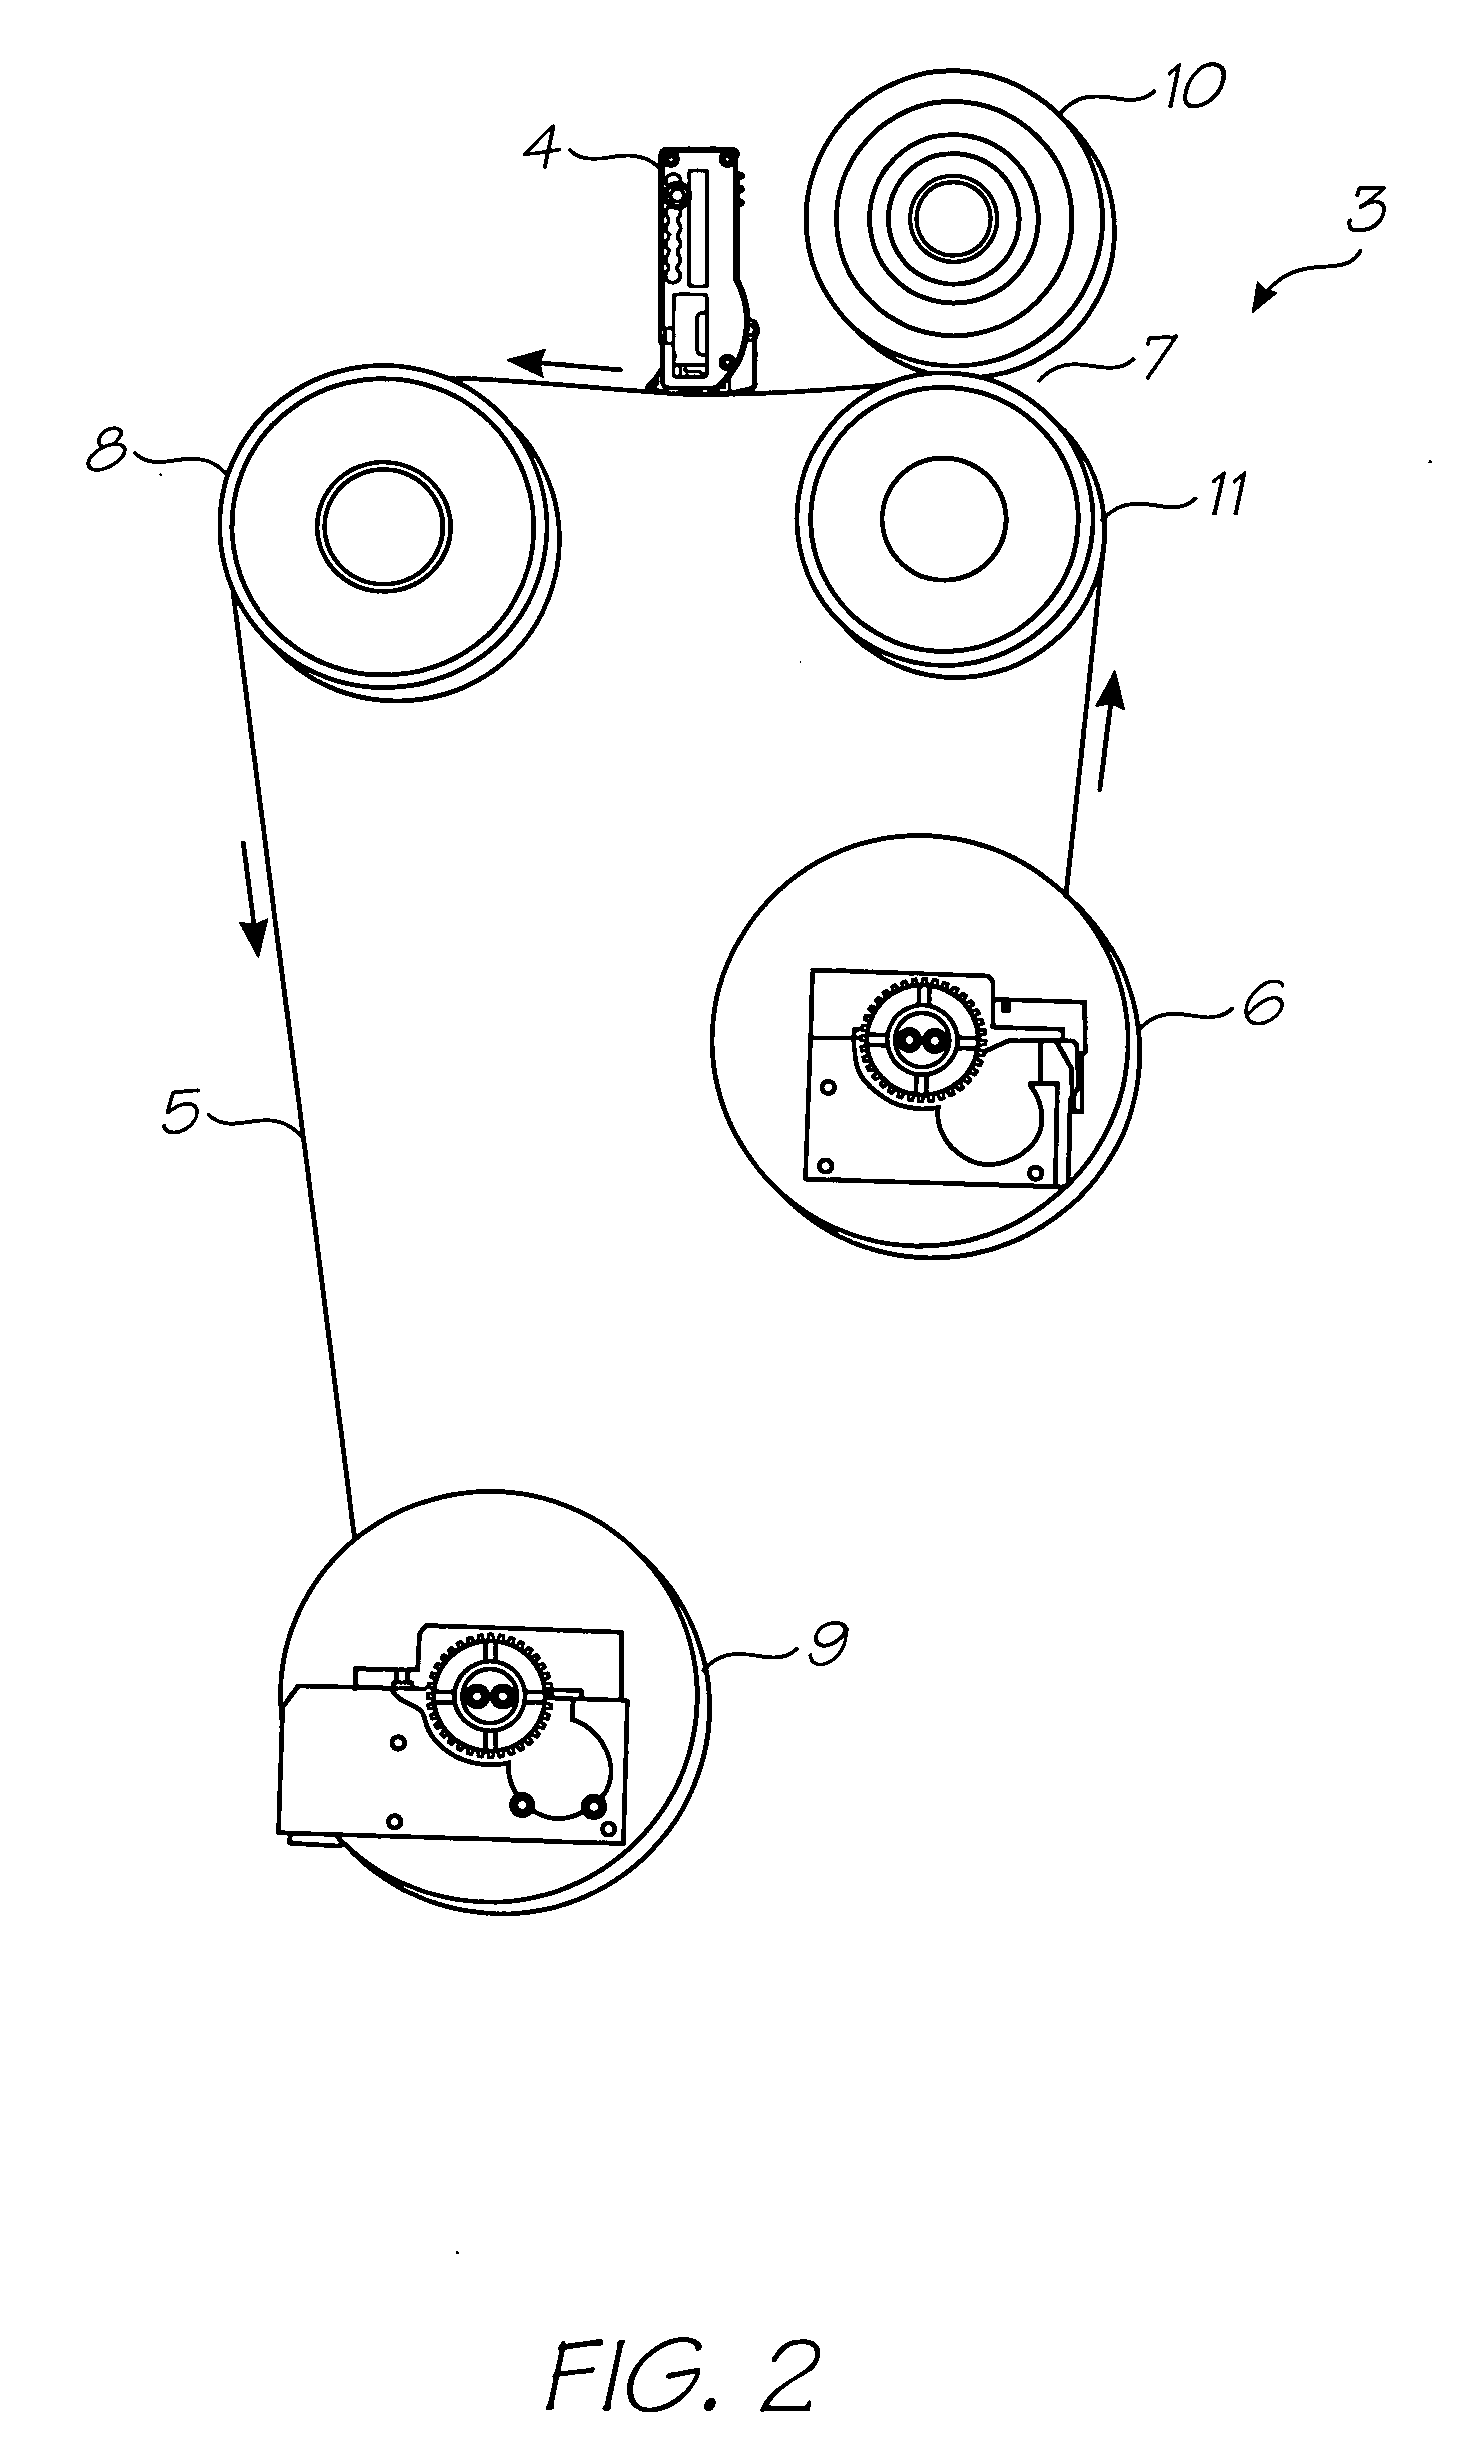 Take-up spool for a printer